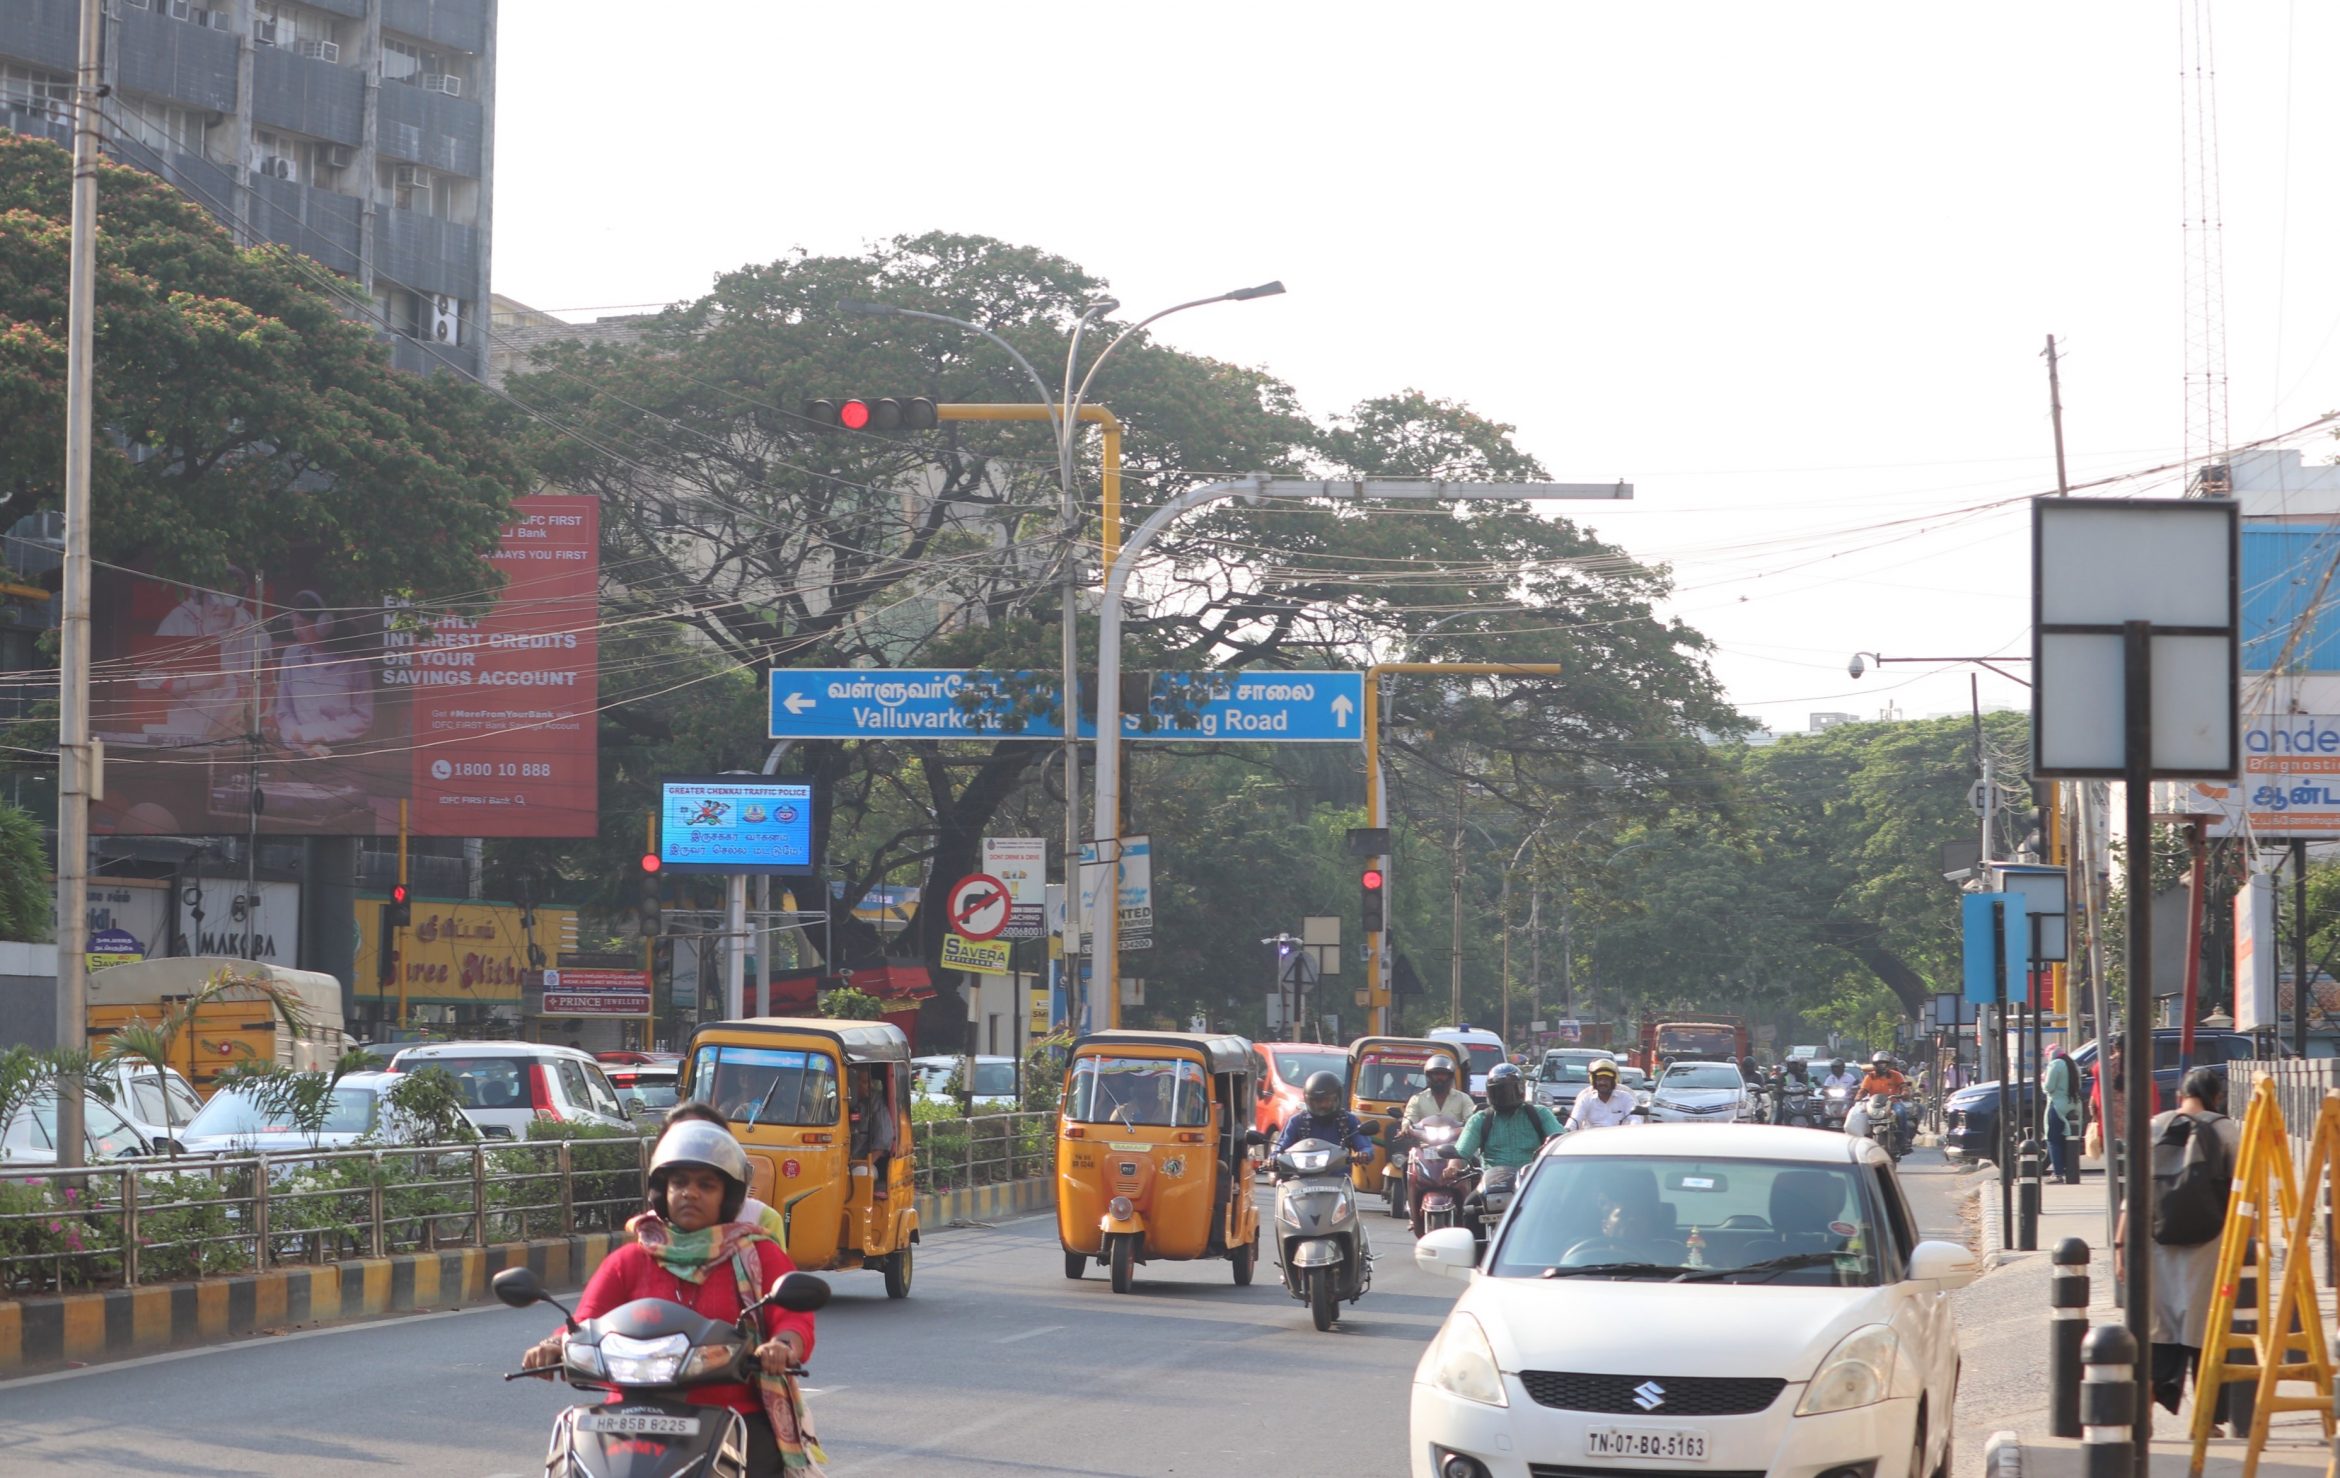 Chennai bustling road photo taken by our Sun team